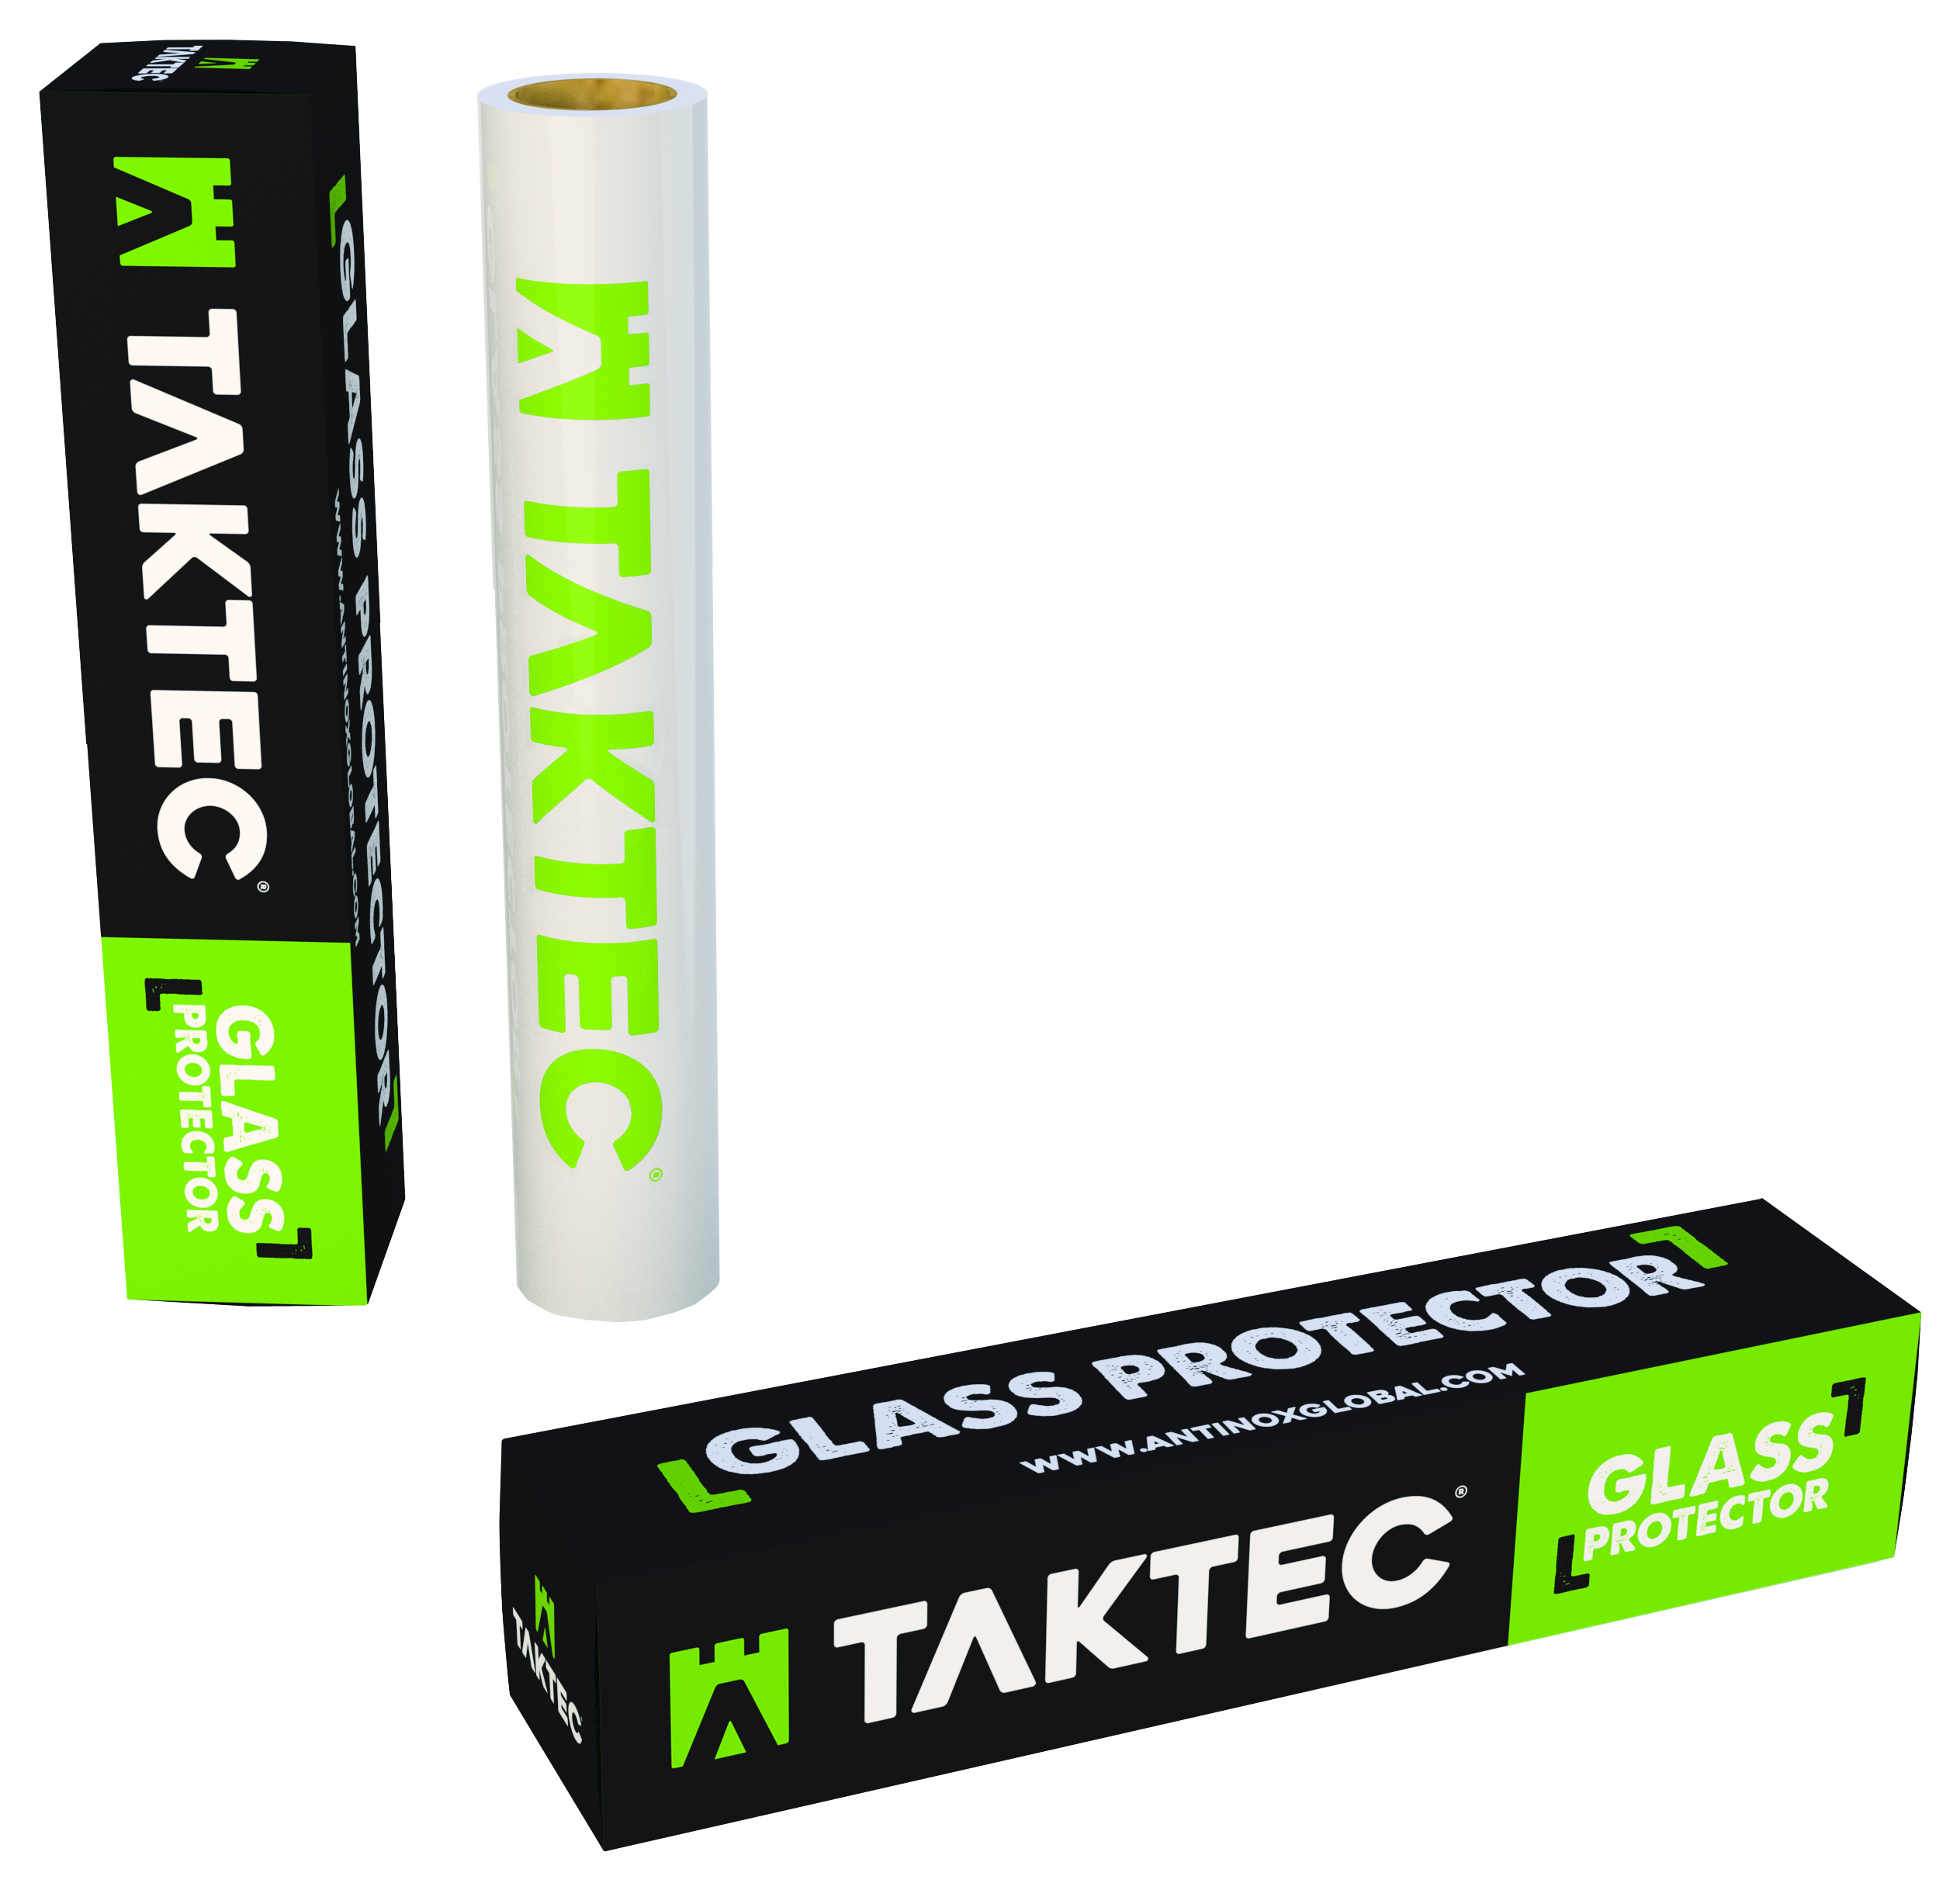 Taktec Premium Glass Protector - 600mm x 100m